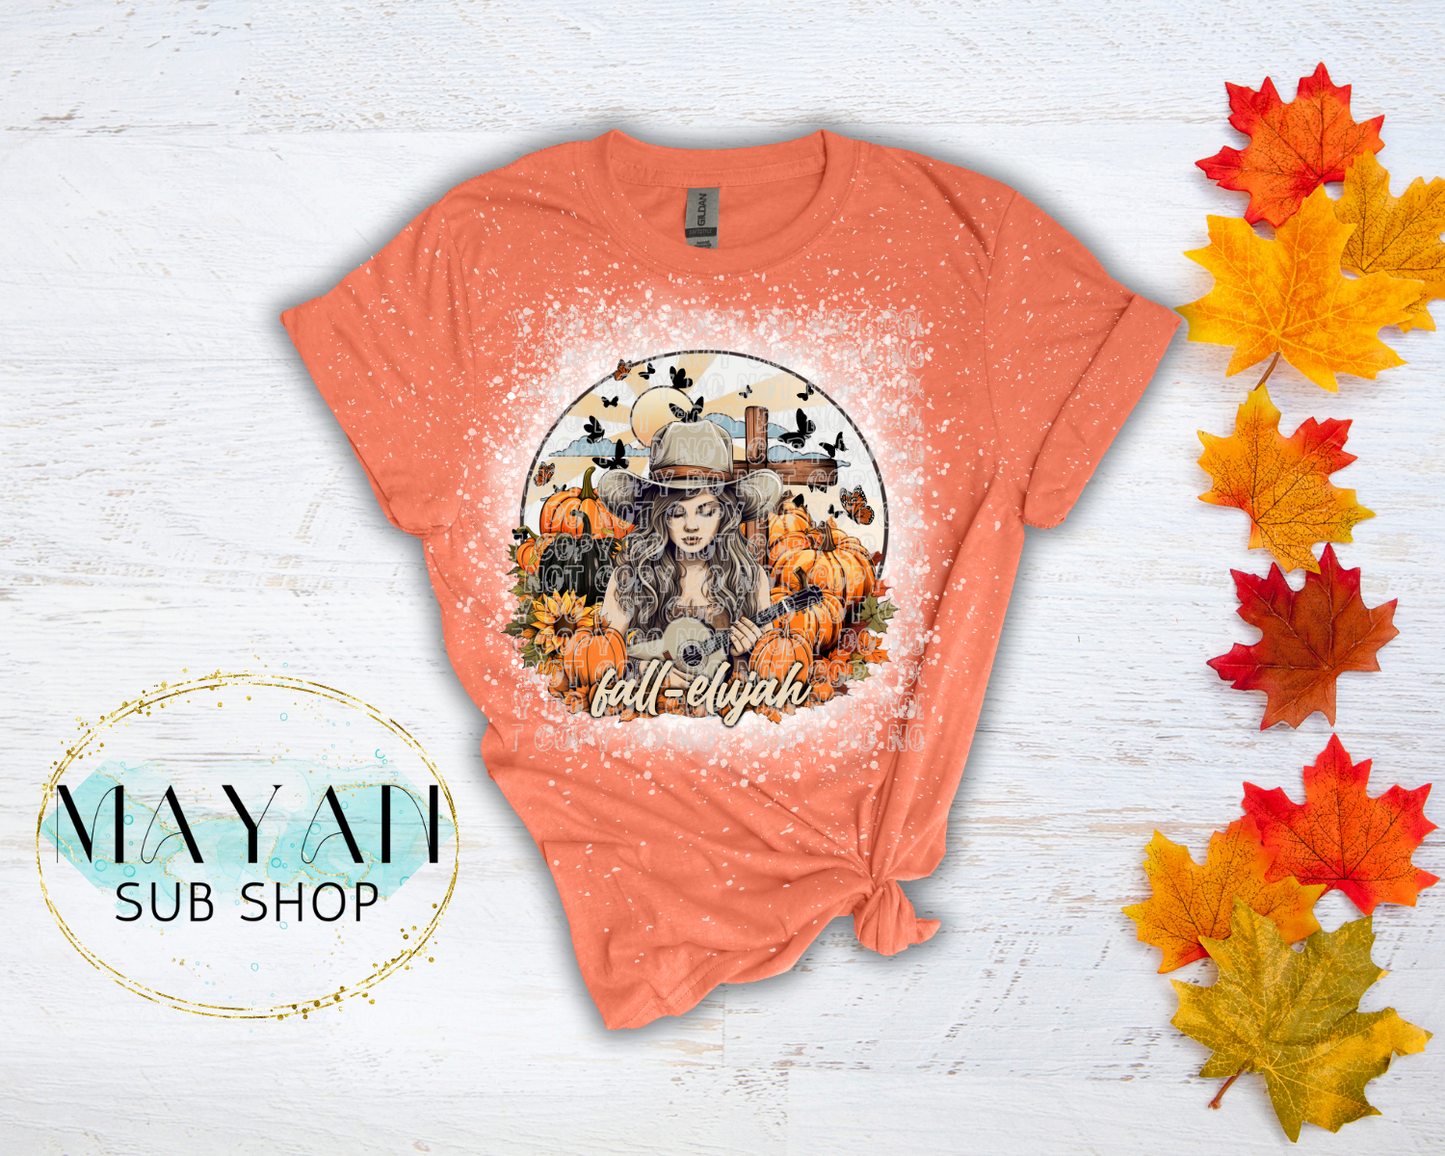 Fall-elujah Bleached Shirt - Mayan Sub Shop